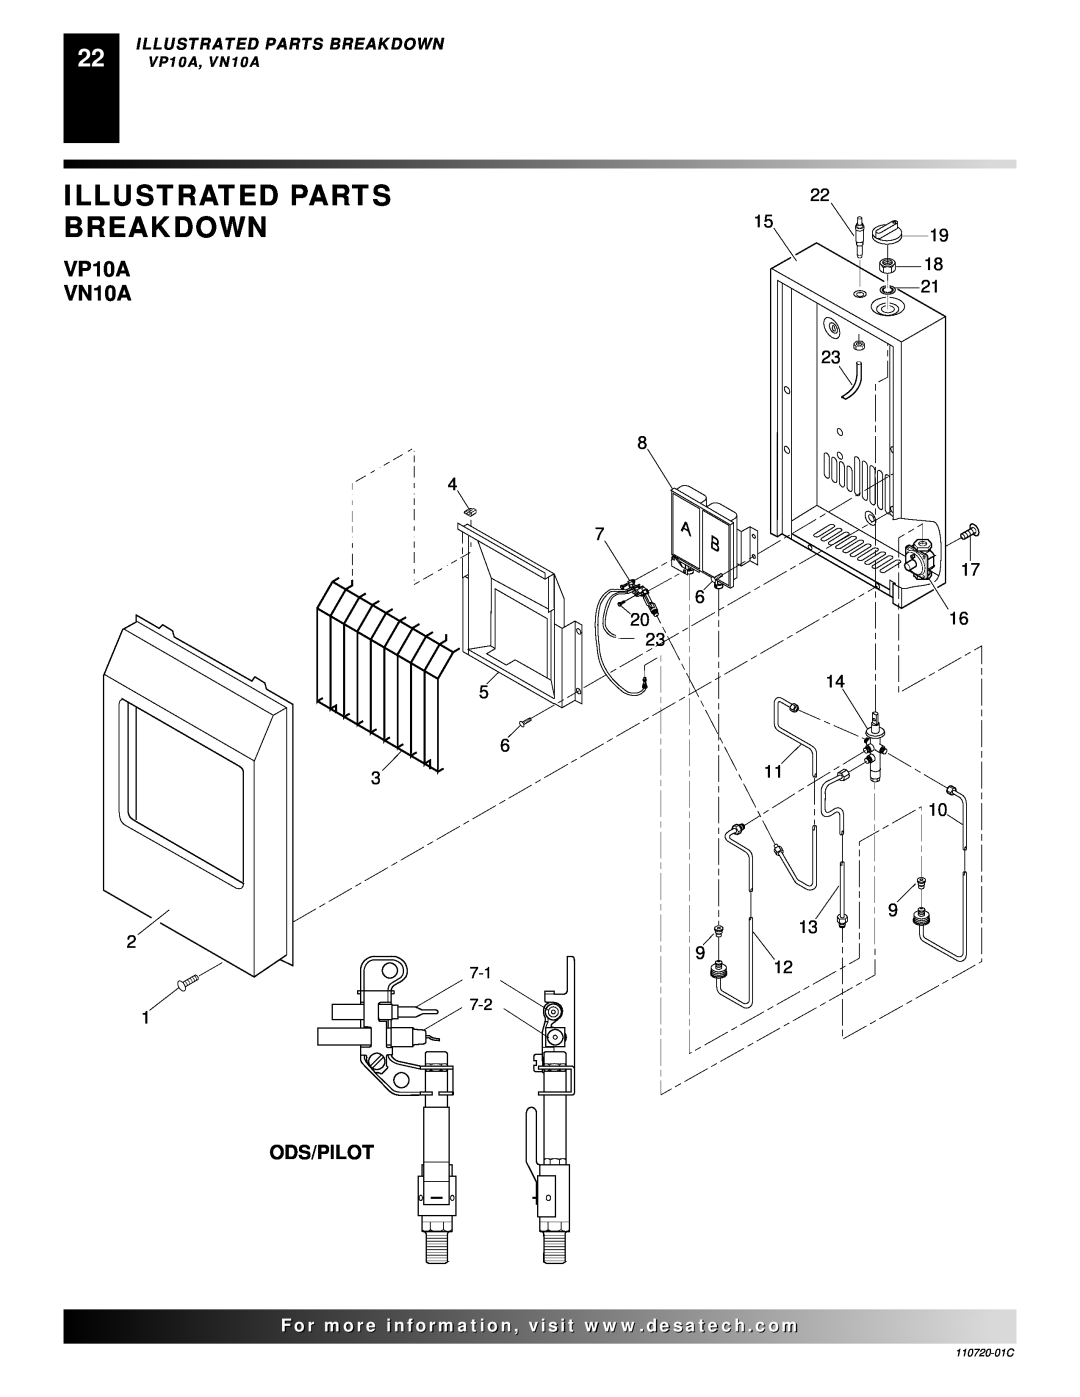 Desa installation manual VP10A VN10A, Ods/Pilot, Illustrated Parts Breakdown 